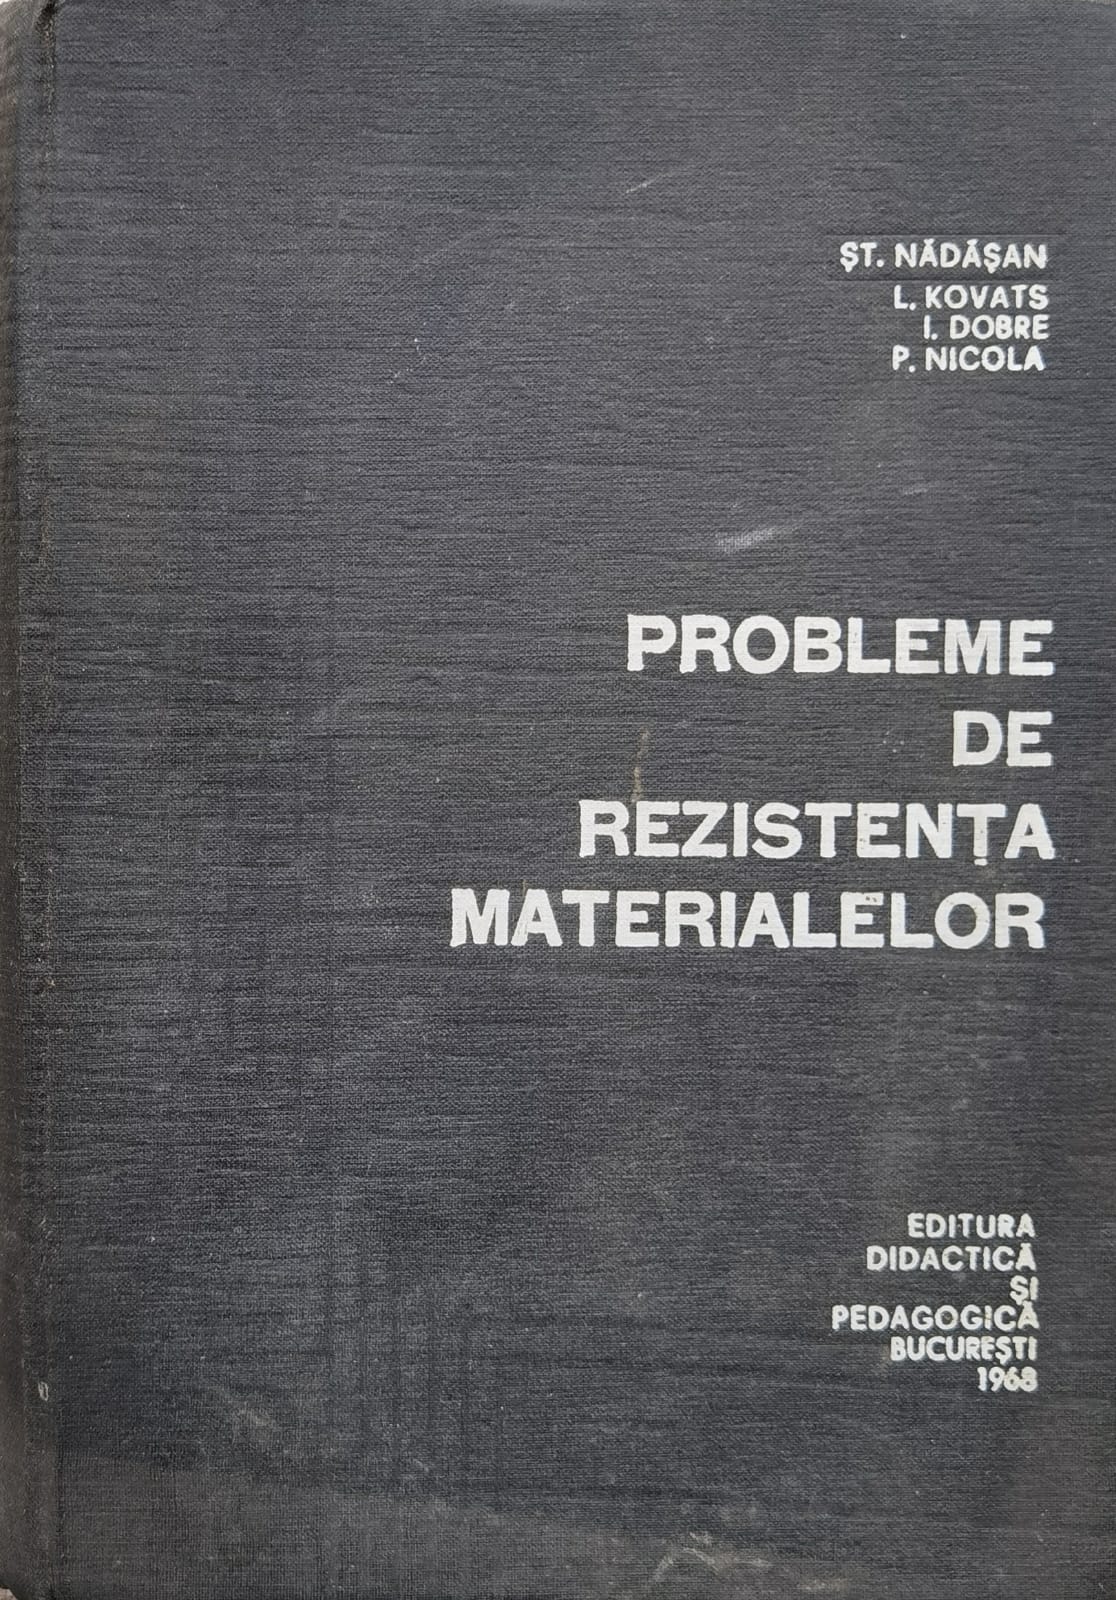 probleme de rezistenta materialelor                                                                  st. nadasan, l. kovats, i. dobre, p. nicola                                                         